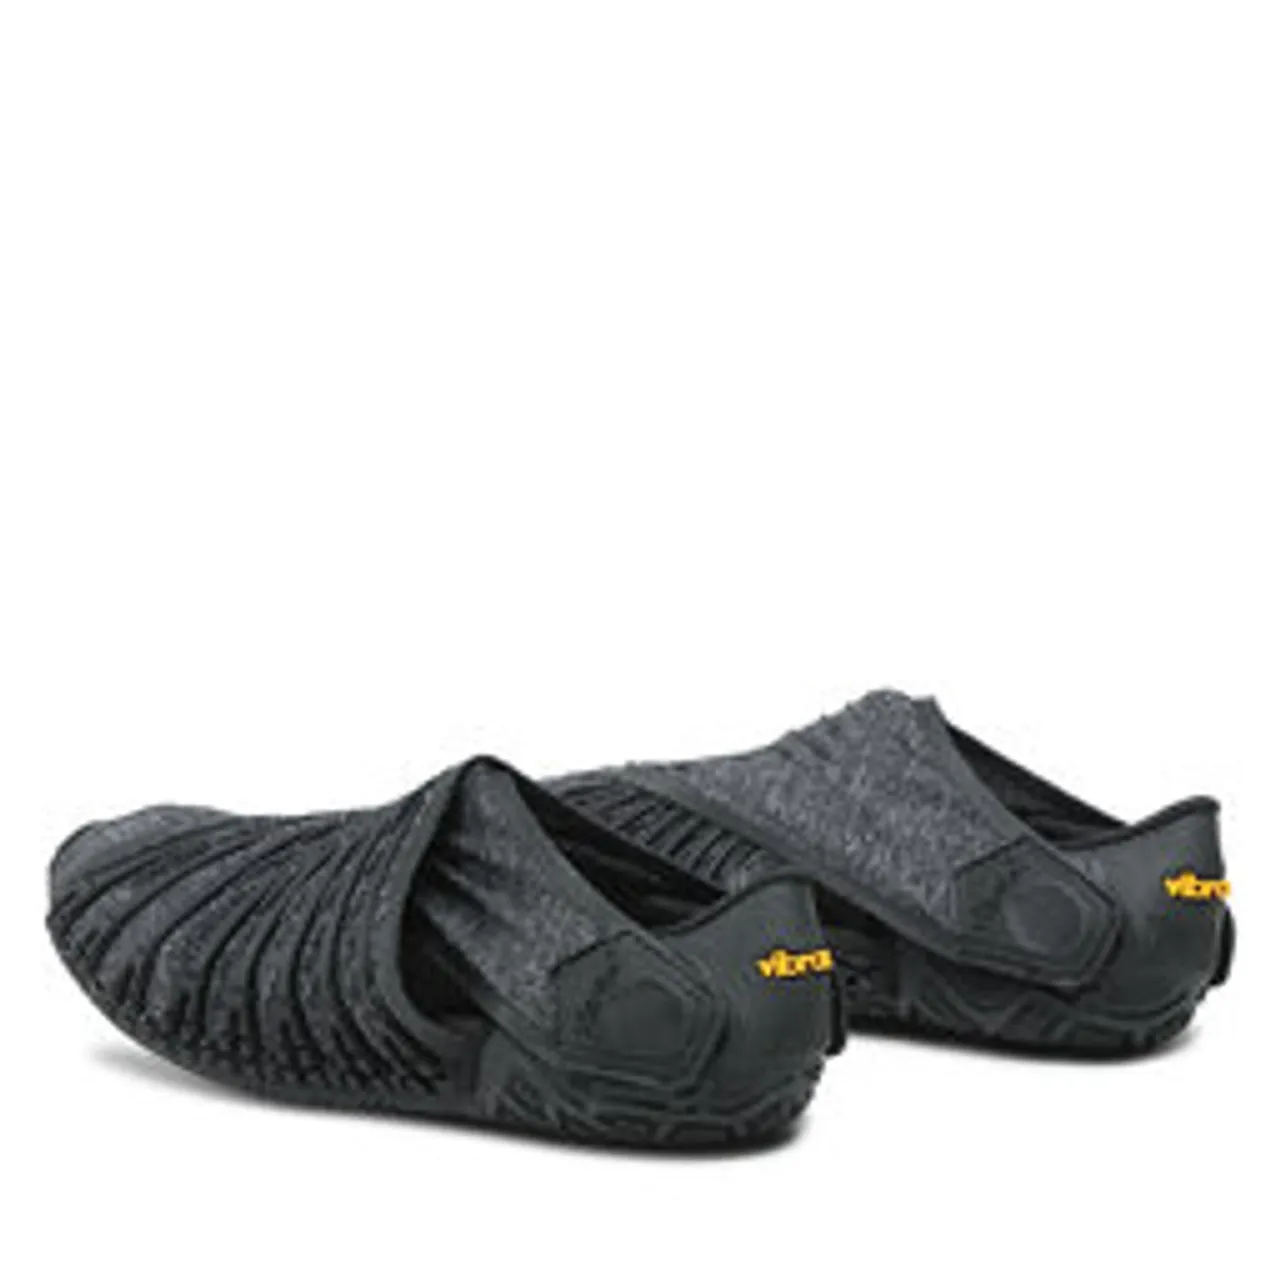 Schuhe Vibram Fivefingers Furoshiki 22WAF01 Black